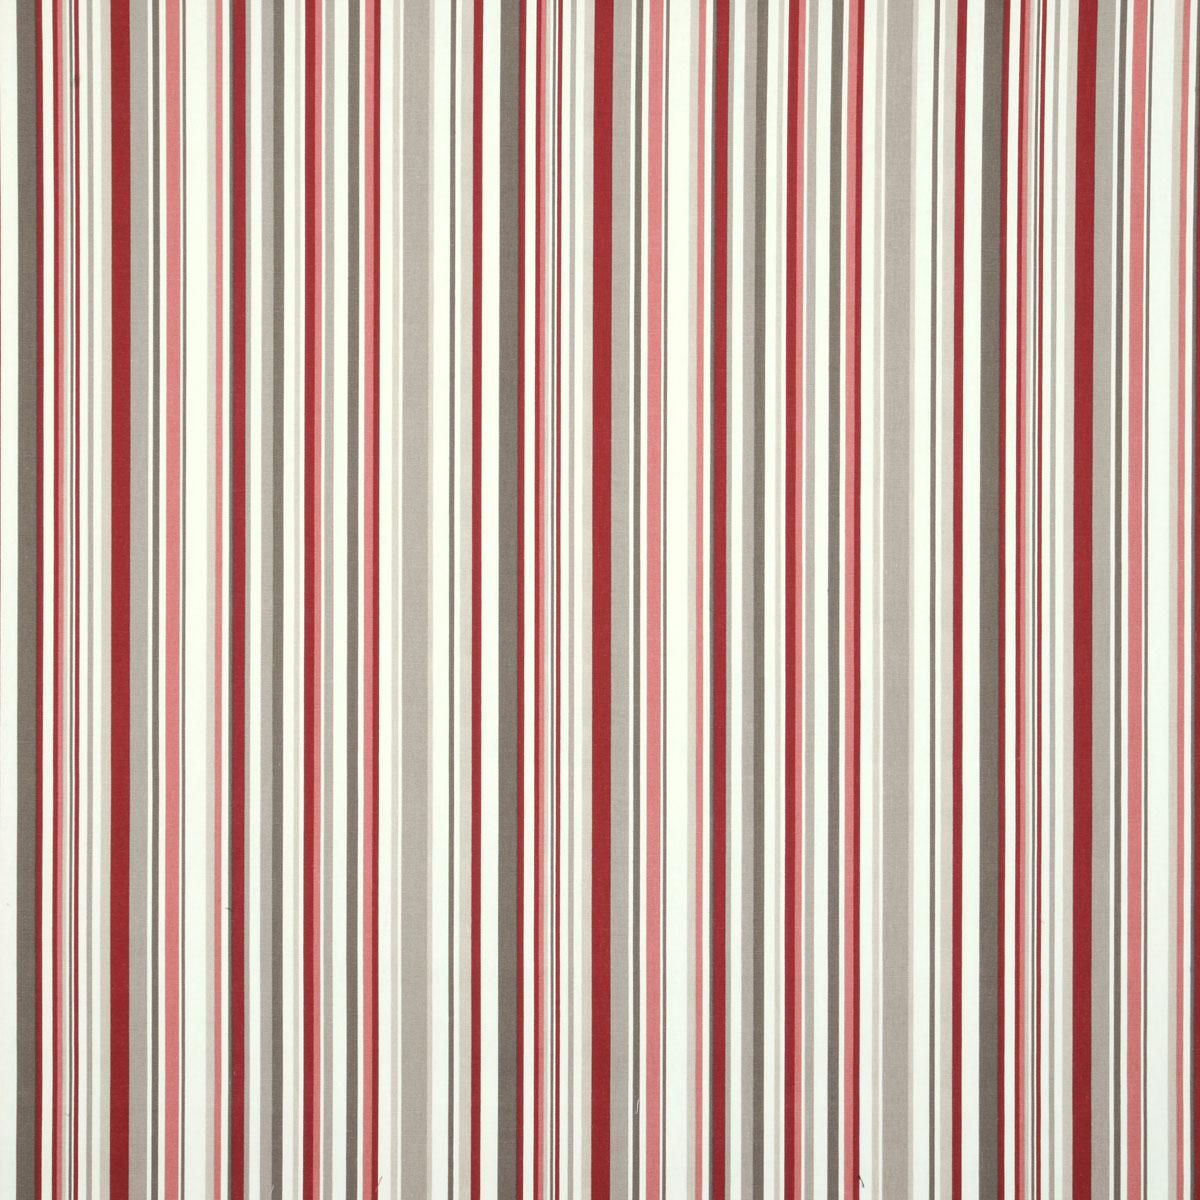 Goa Stripe Fabric Cherry